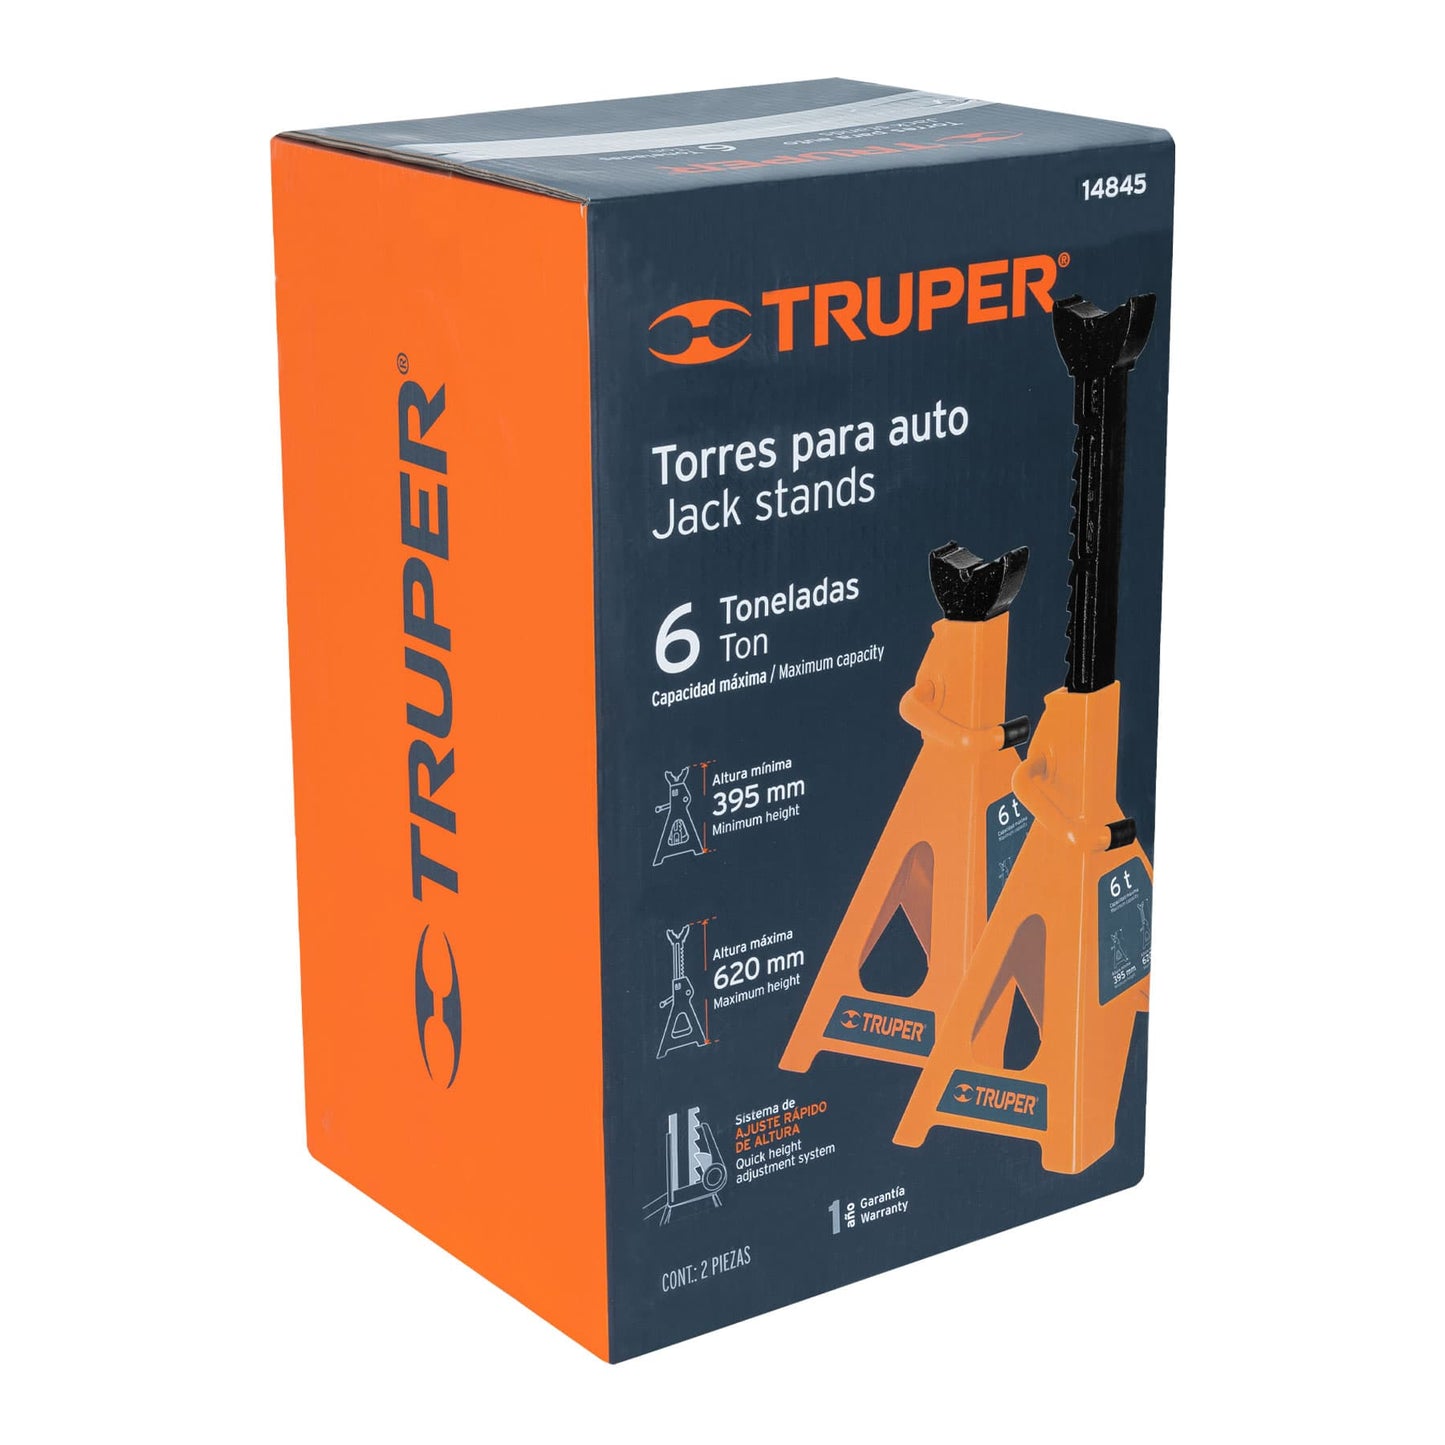 Caja con 2 torres de 6 ton para auto, Truper